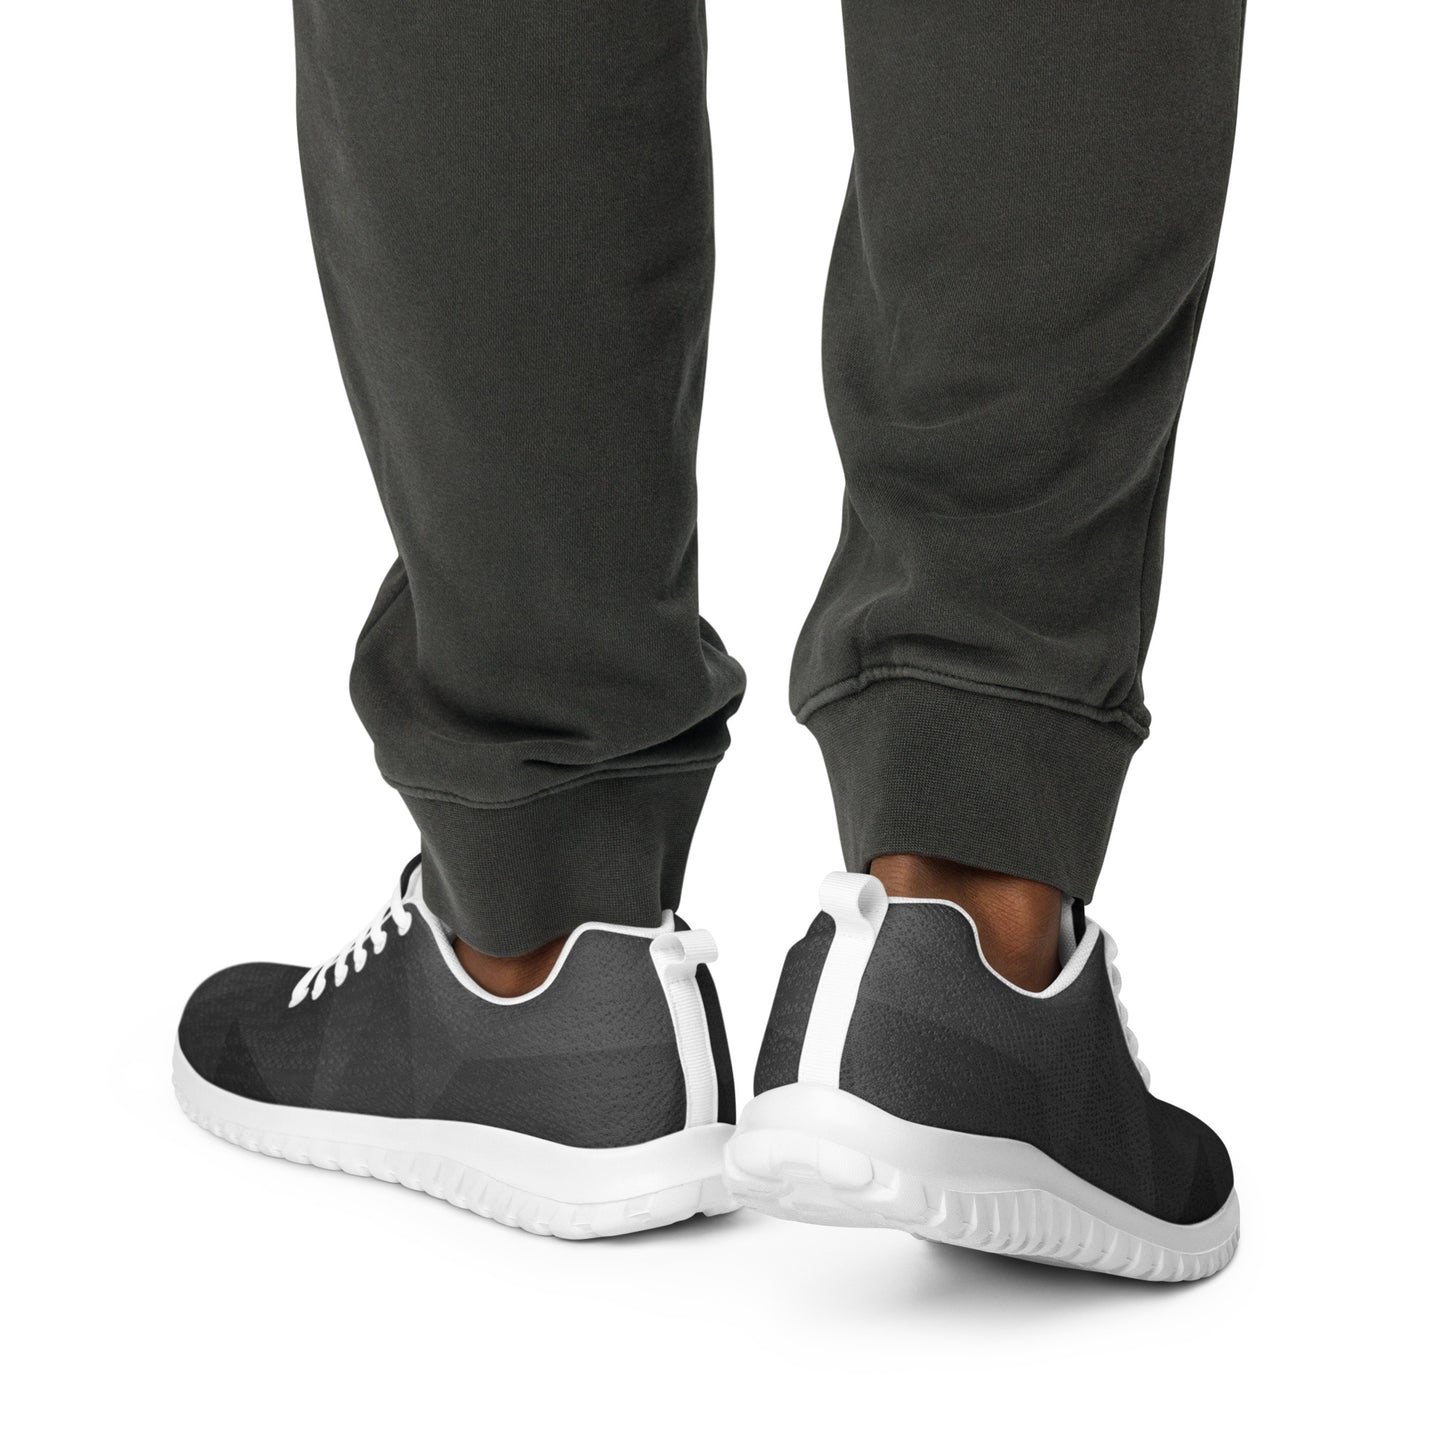 DASH Geo Black Men’s Athletic Shoes Lightweight Breathable Design by IOBI Original Apparel